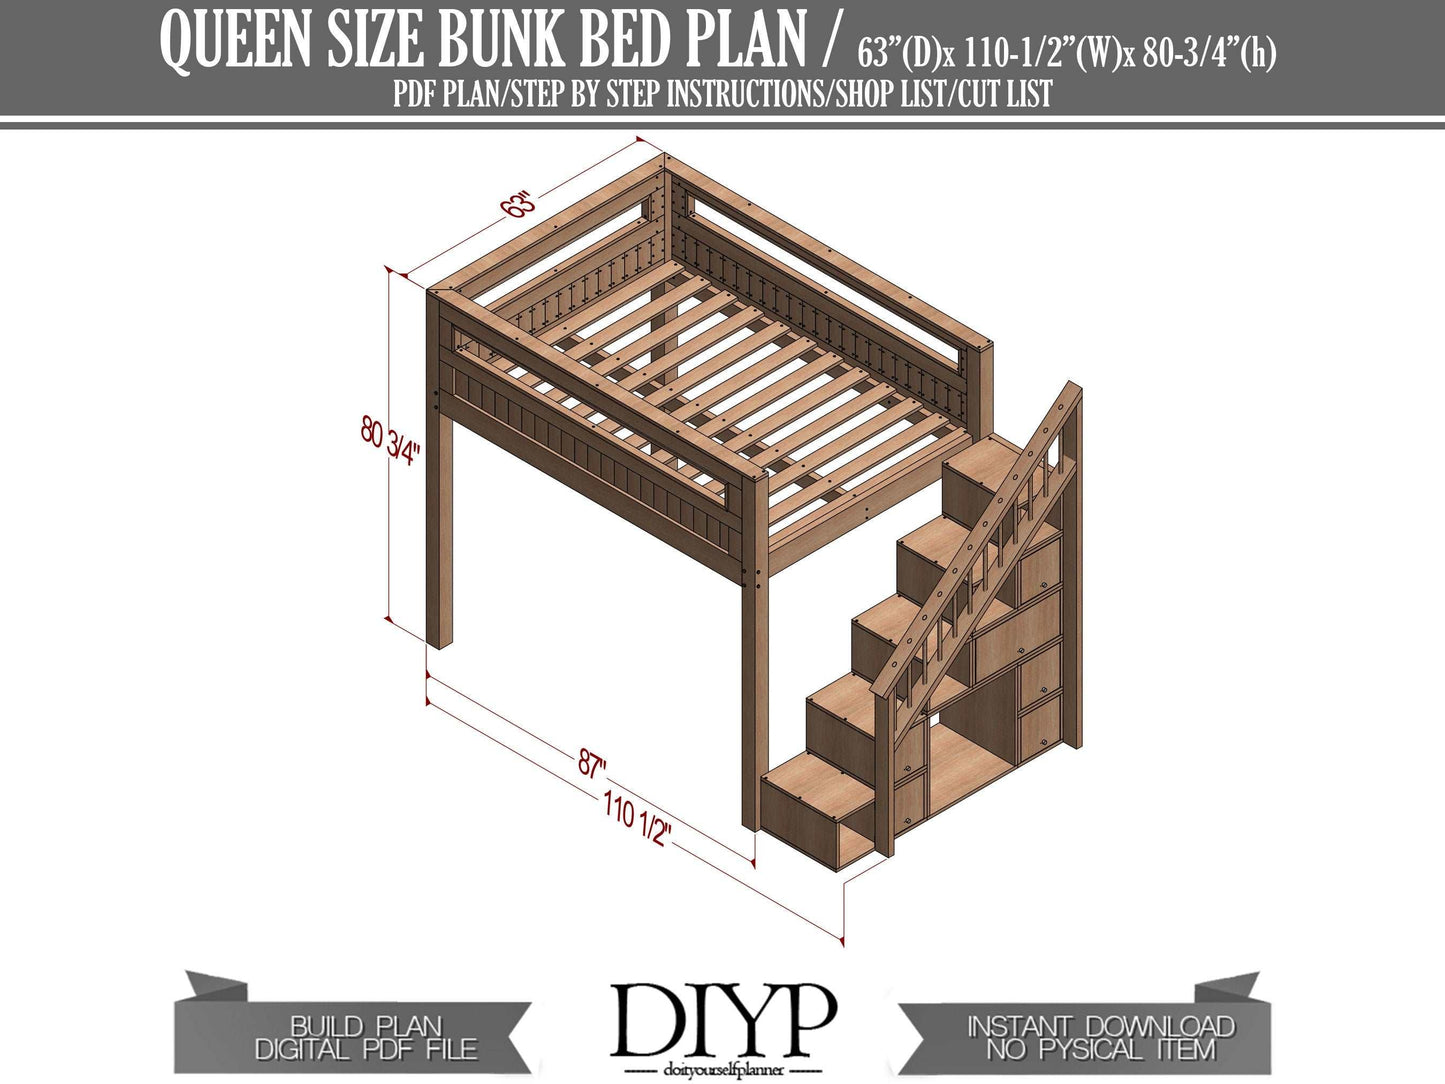 Multifunctional Queen Size Bunk Bed with storage area Plan - Modern bedroom ideas build plans - queen size loft bed